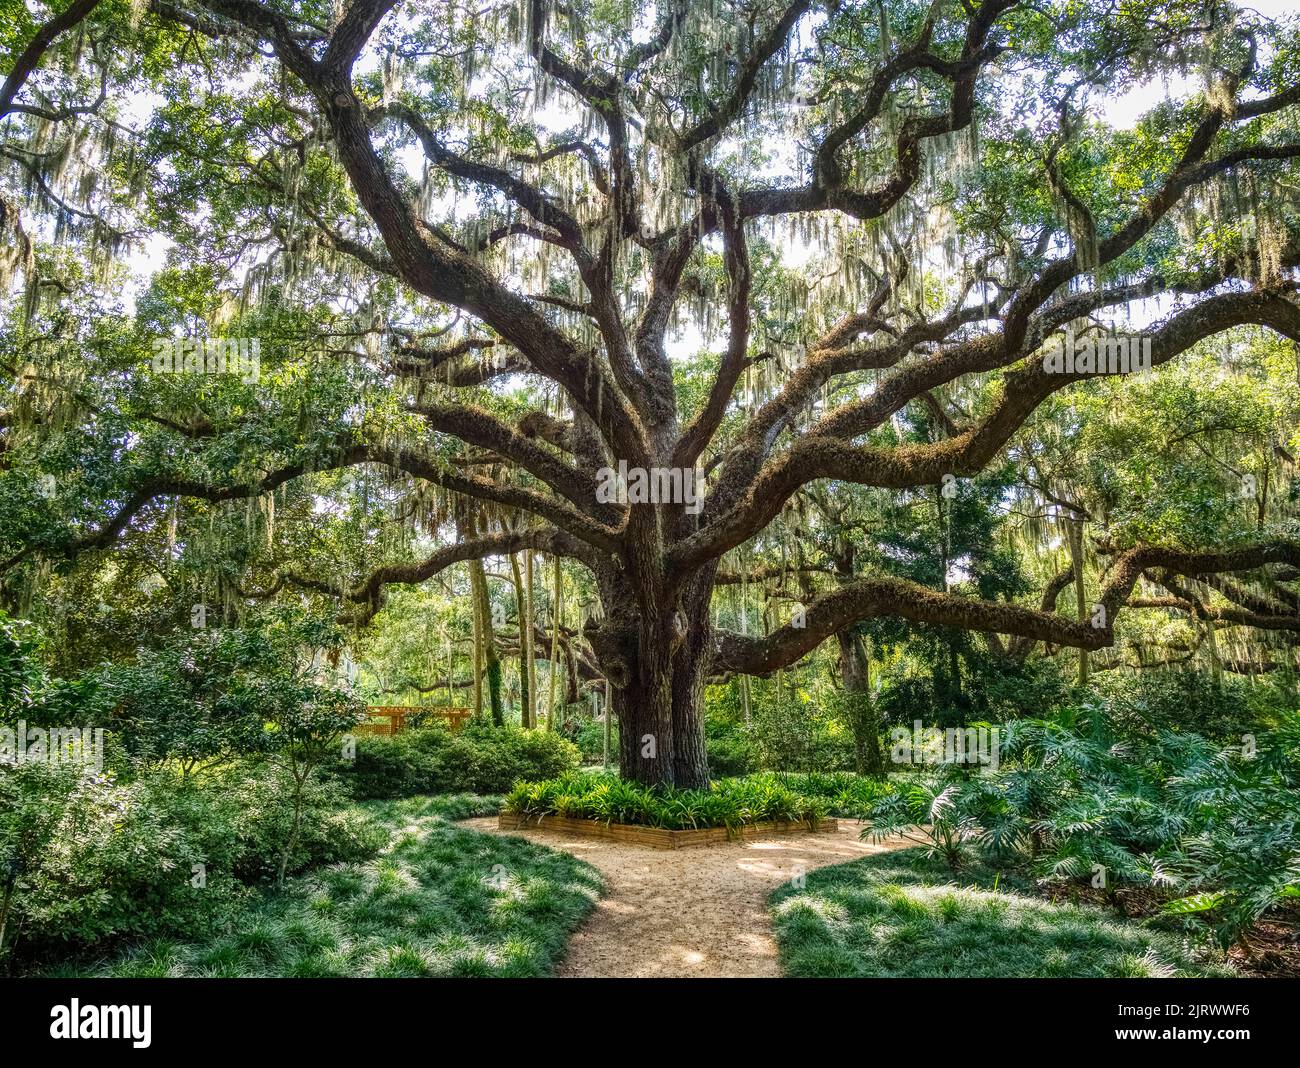 Live Oak tree in the Washington Oaks Historic District of Washington Oaks Gardens State Park in Palm Coast Florida Stock Photo